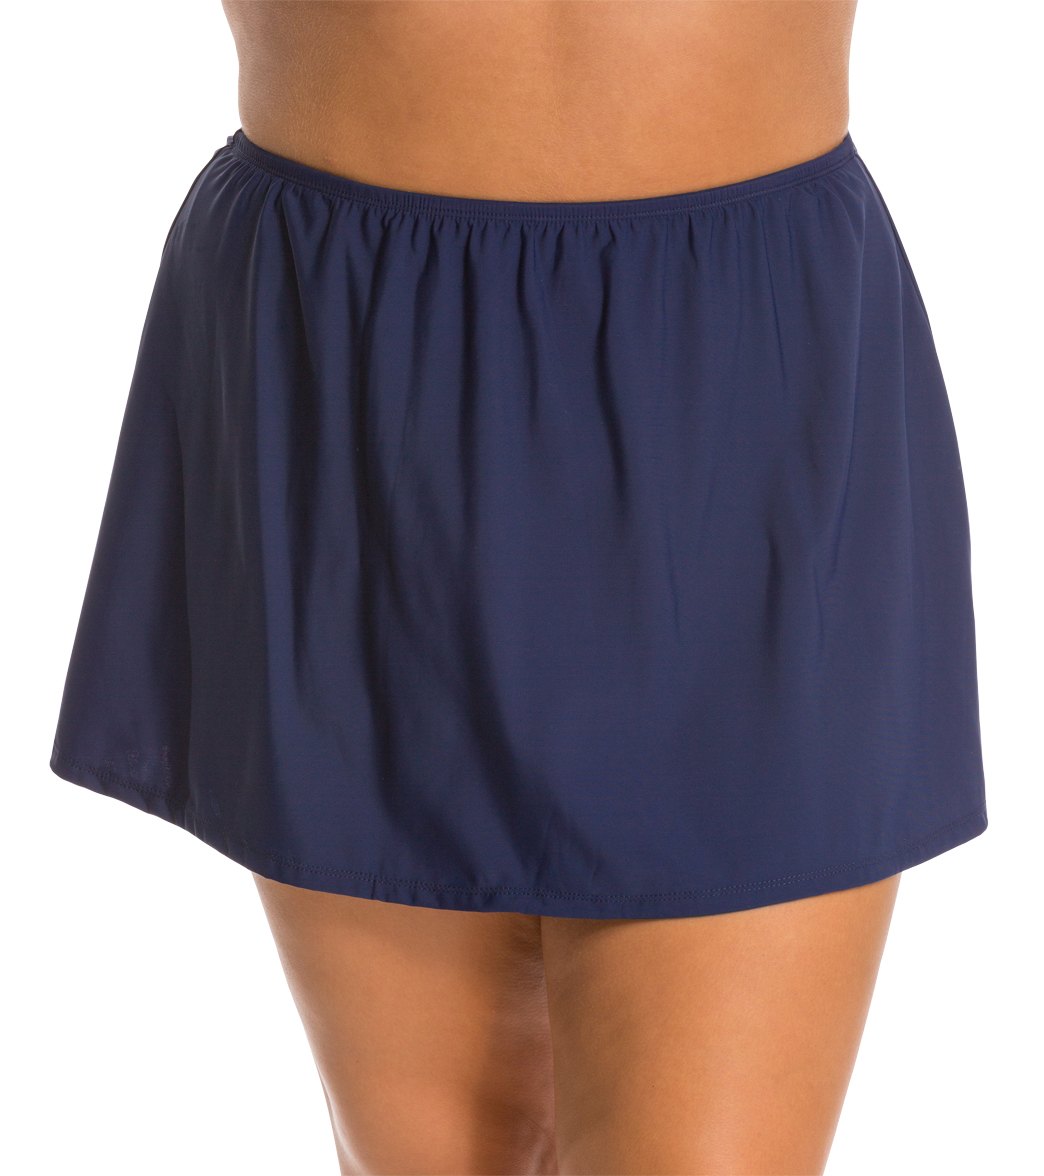 Topanga Plus Size Solid Swim Skirt - Navy 22W Nylon/Spandex - Swimoutlet.com